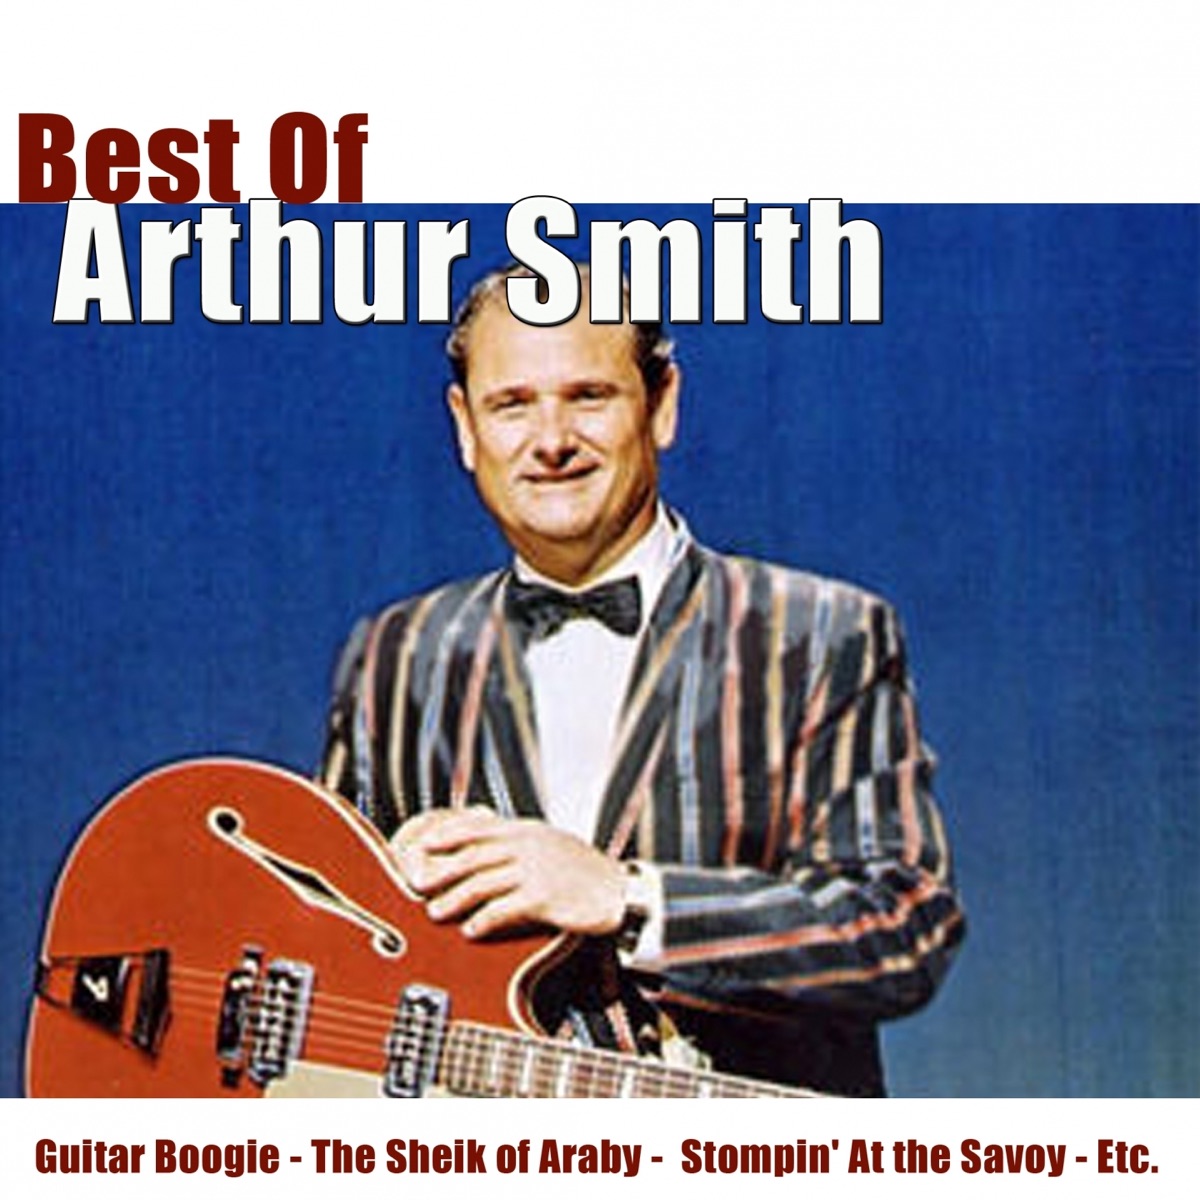 Best of Arthur Smith (Guitar Boogie) par Arthur Smith sur Apple Music